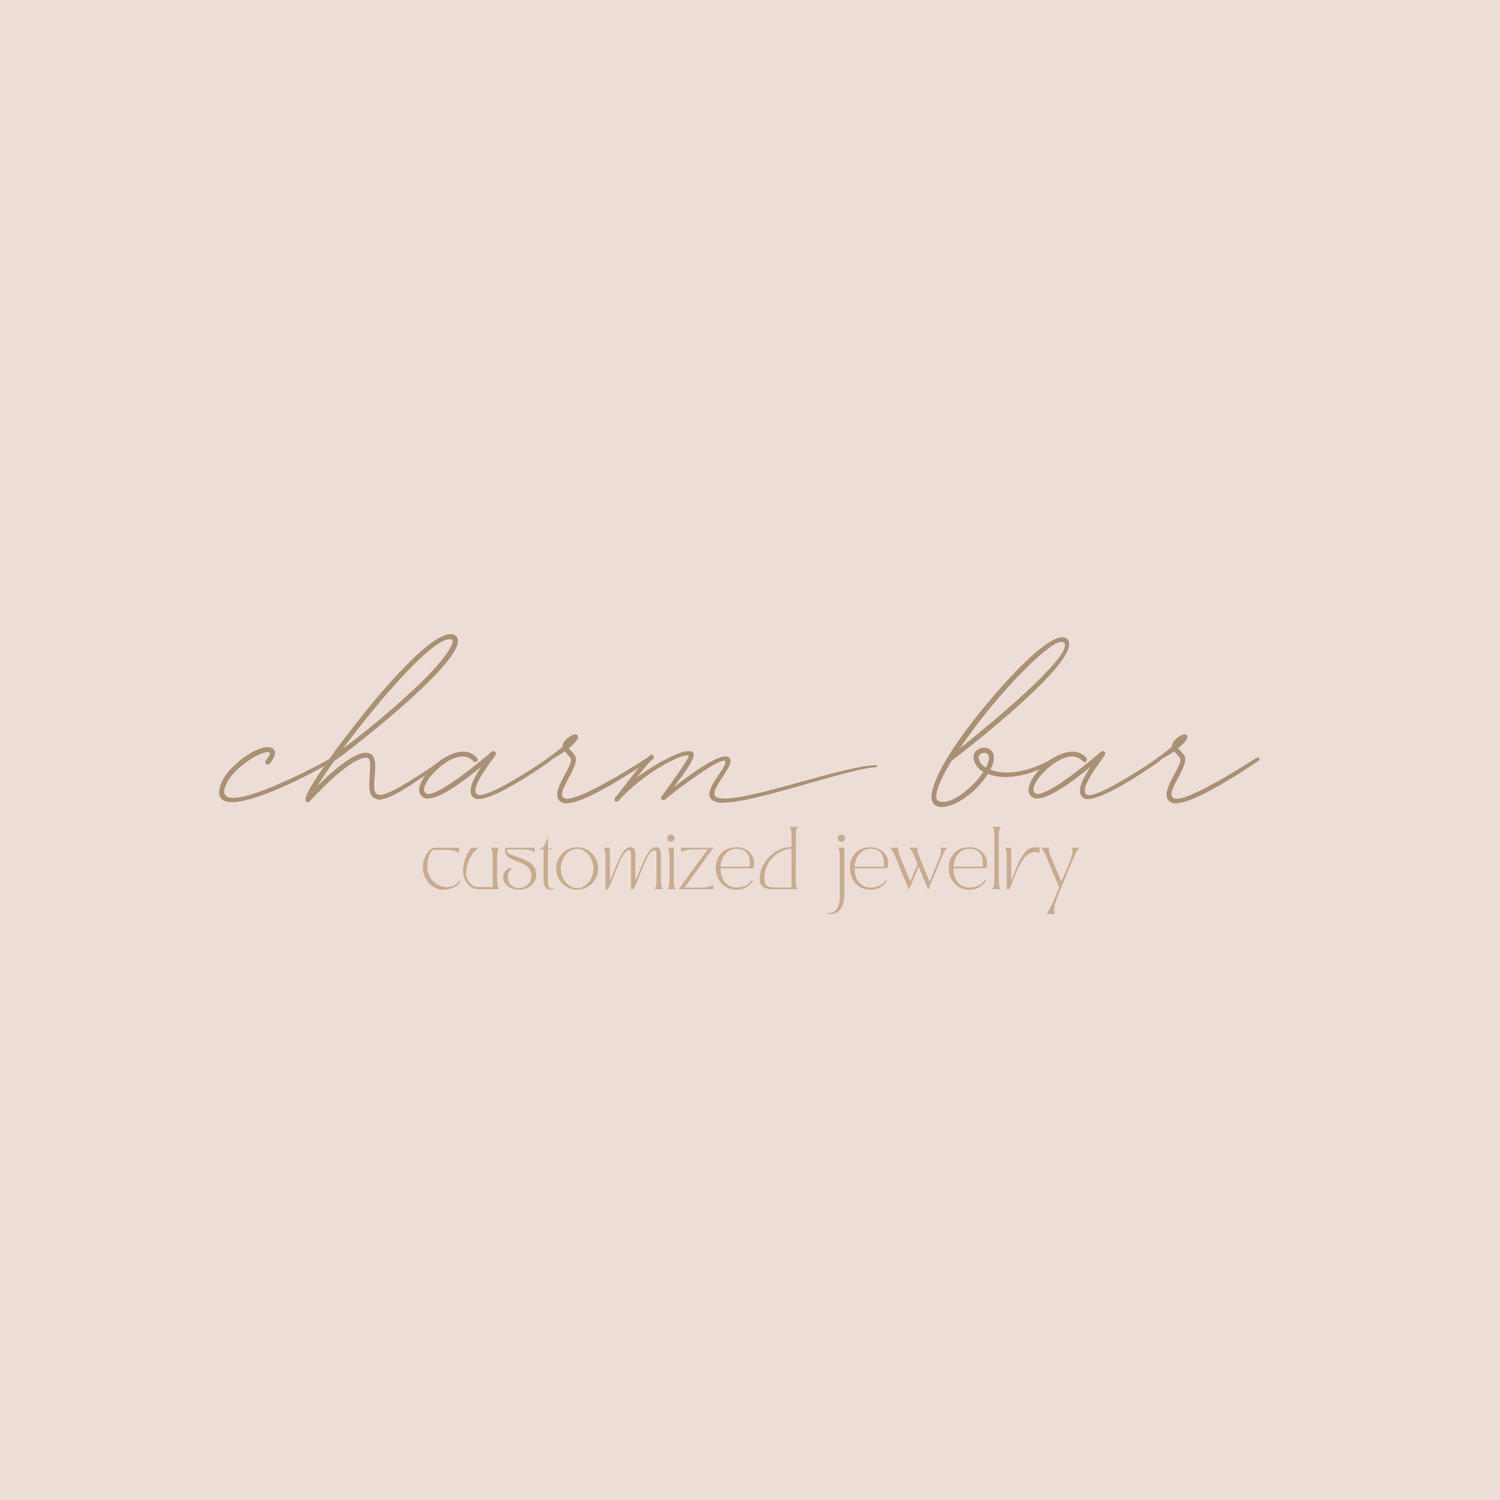 Charm Bar